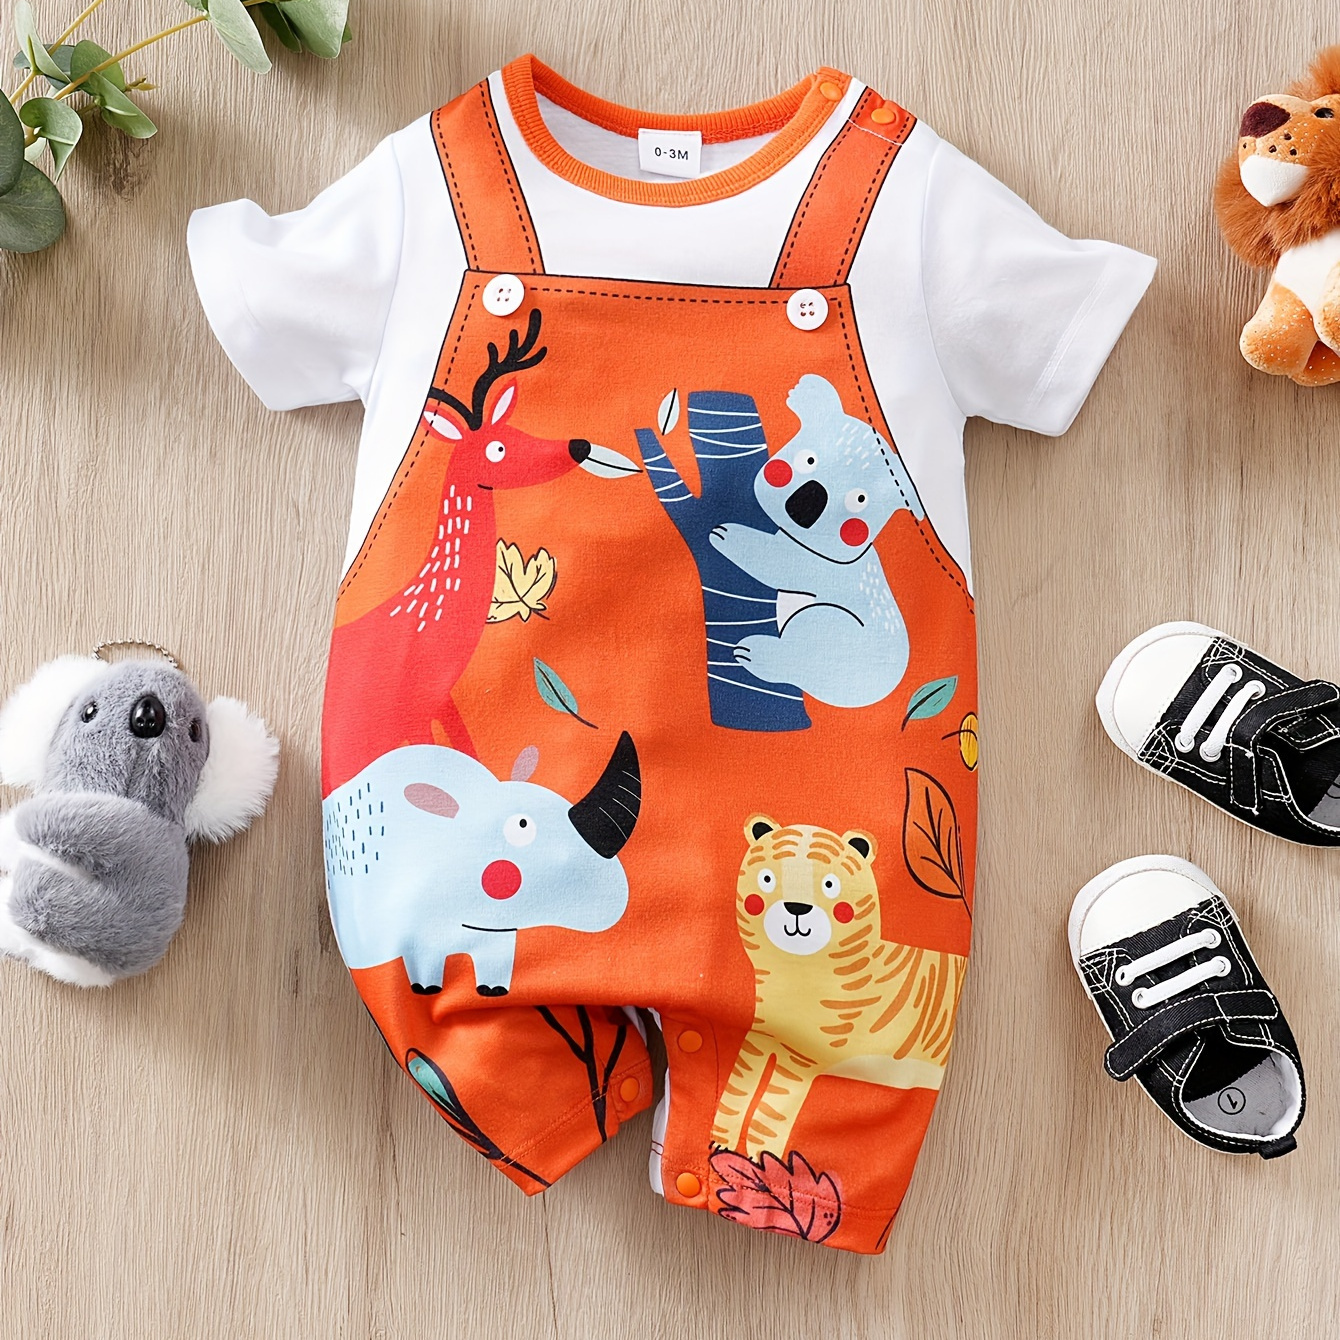 

Baby Boy's Summer Outfit, Cute Koala Print Short Sleeve Crew Neck Romper, Infant Bodysuit, Orange Trim